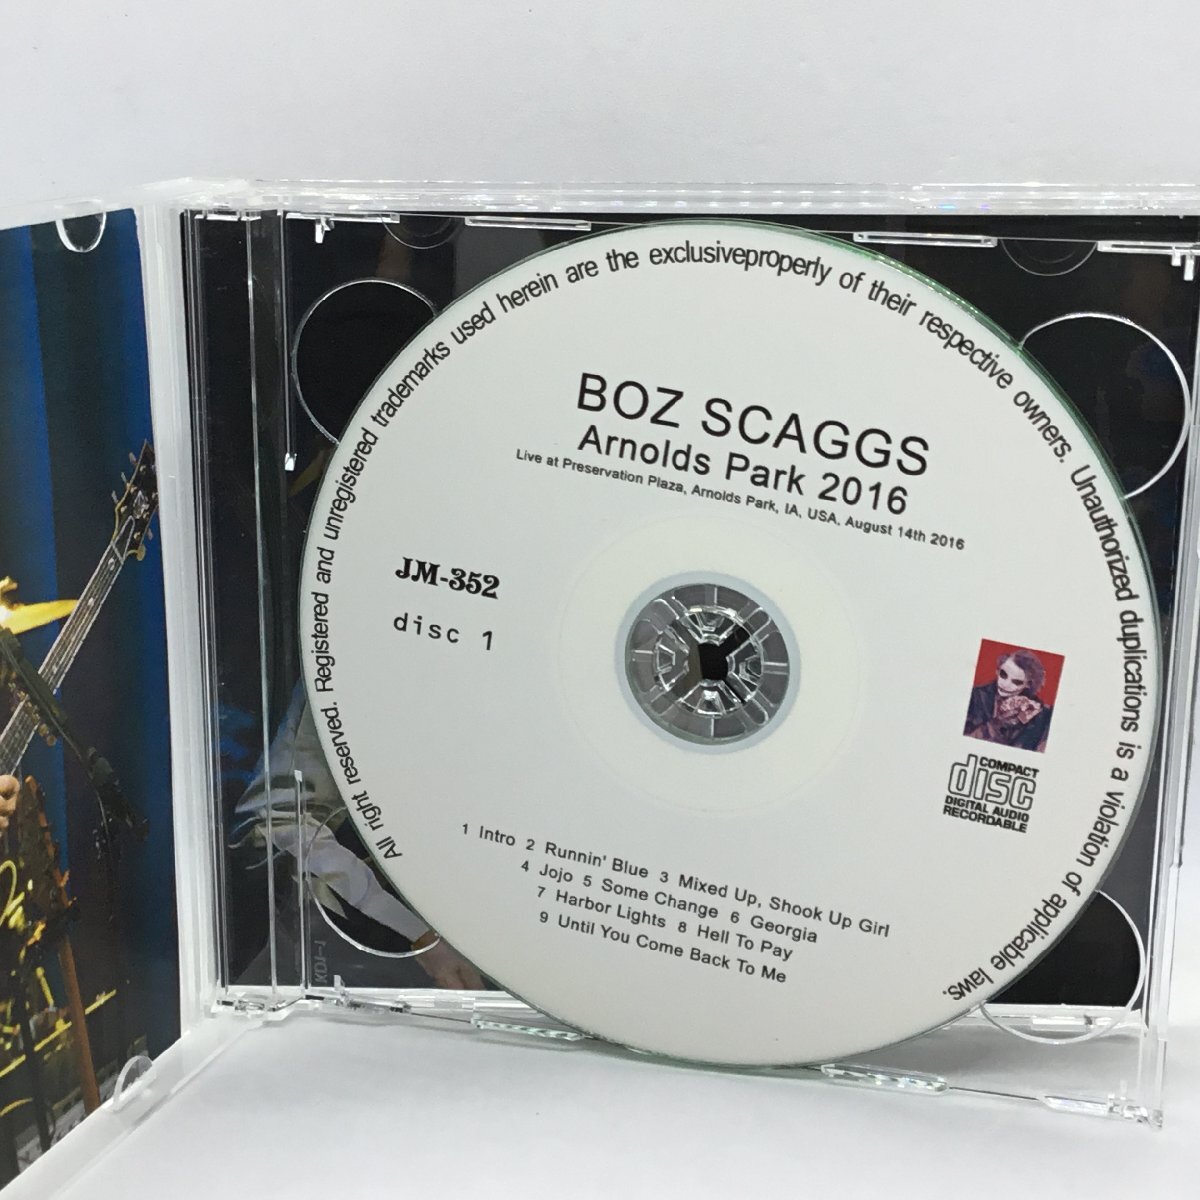 CD-R ◇ BOZ SCAGGS / ARNOLDS PARK 2016 (2CD-R) JM-352 LIVE AT PRESERVATION PLAZA IA 2016_画像3